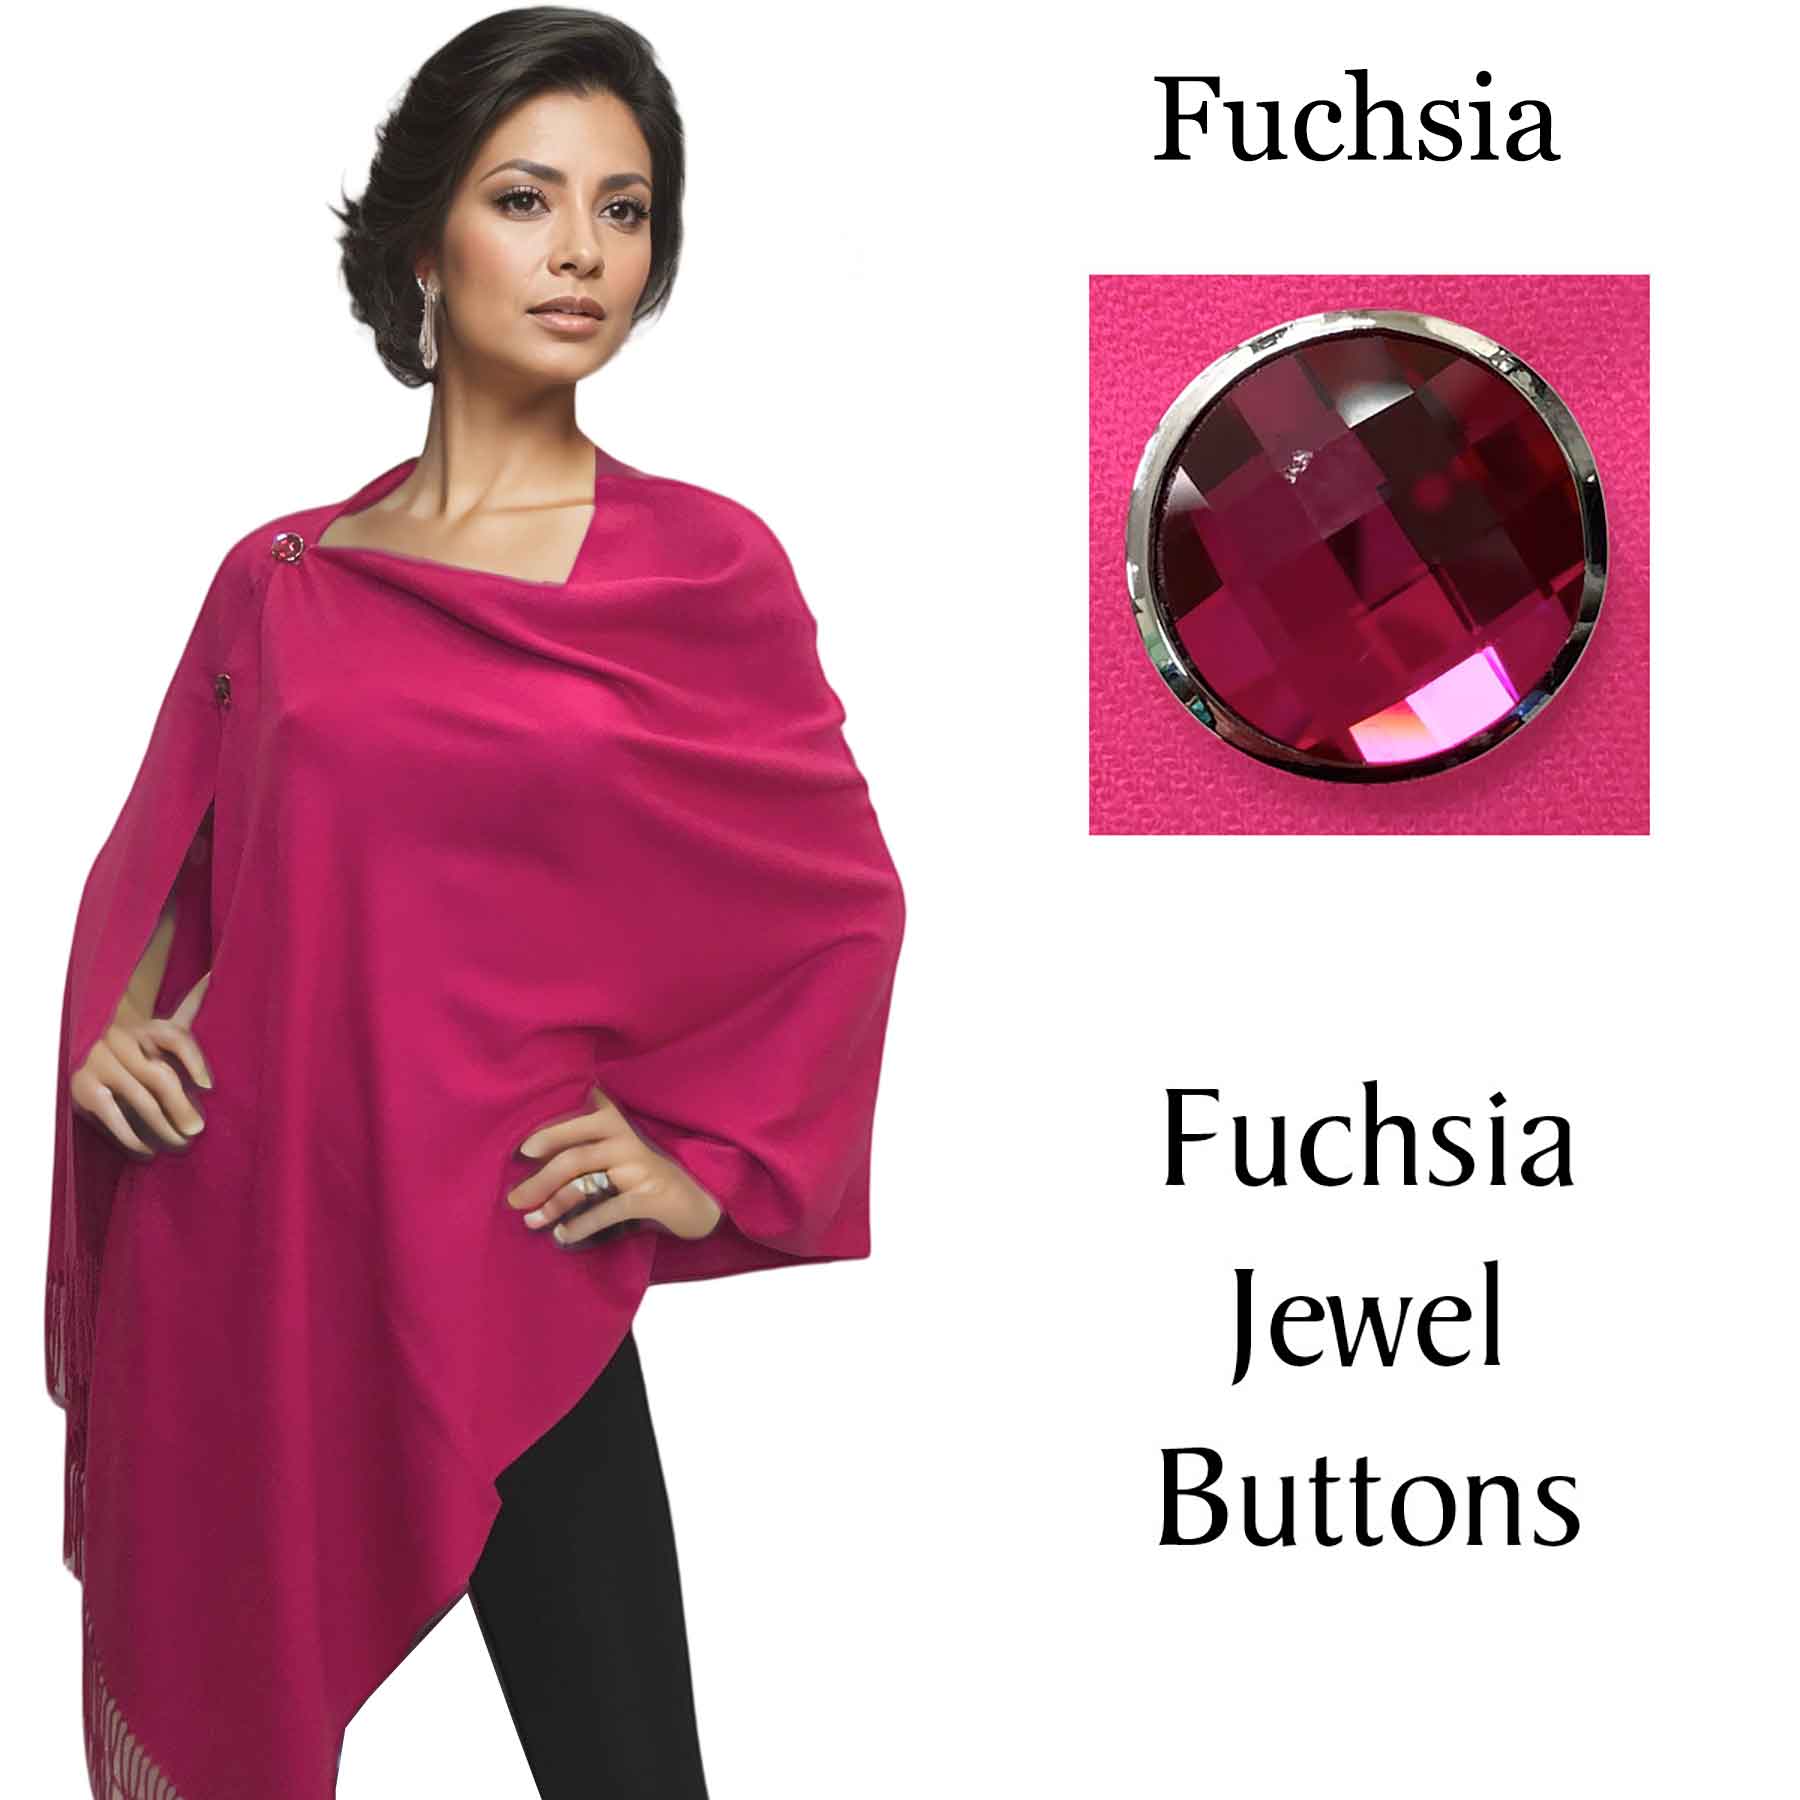 #14 Fuchsia with Fuchsia Jewel Buttons